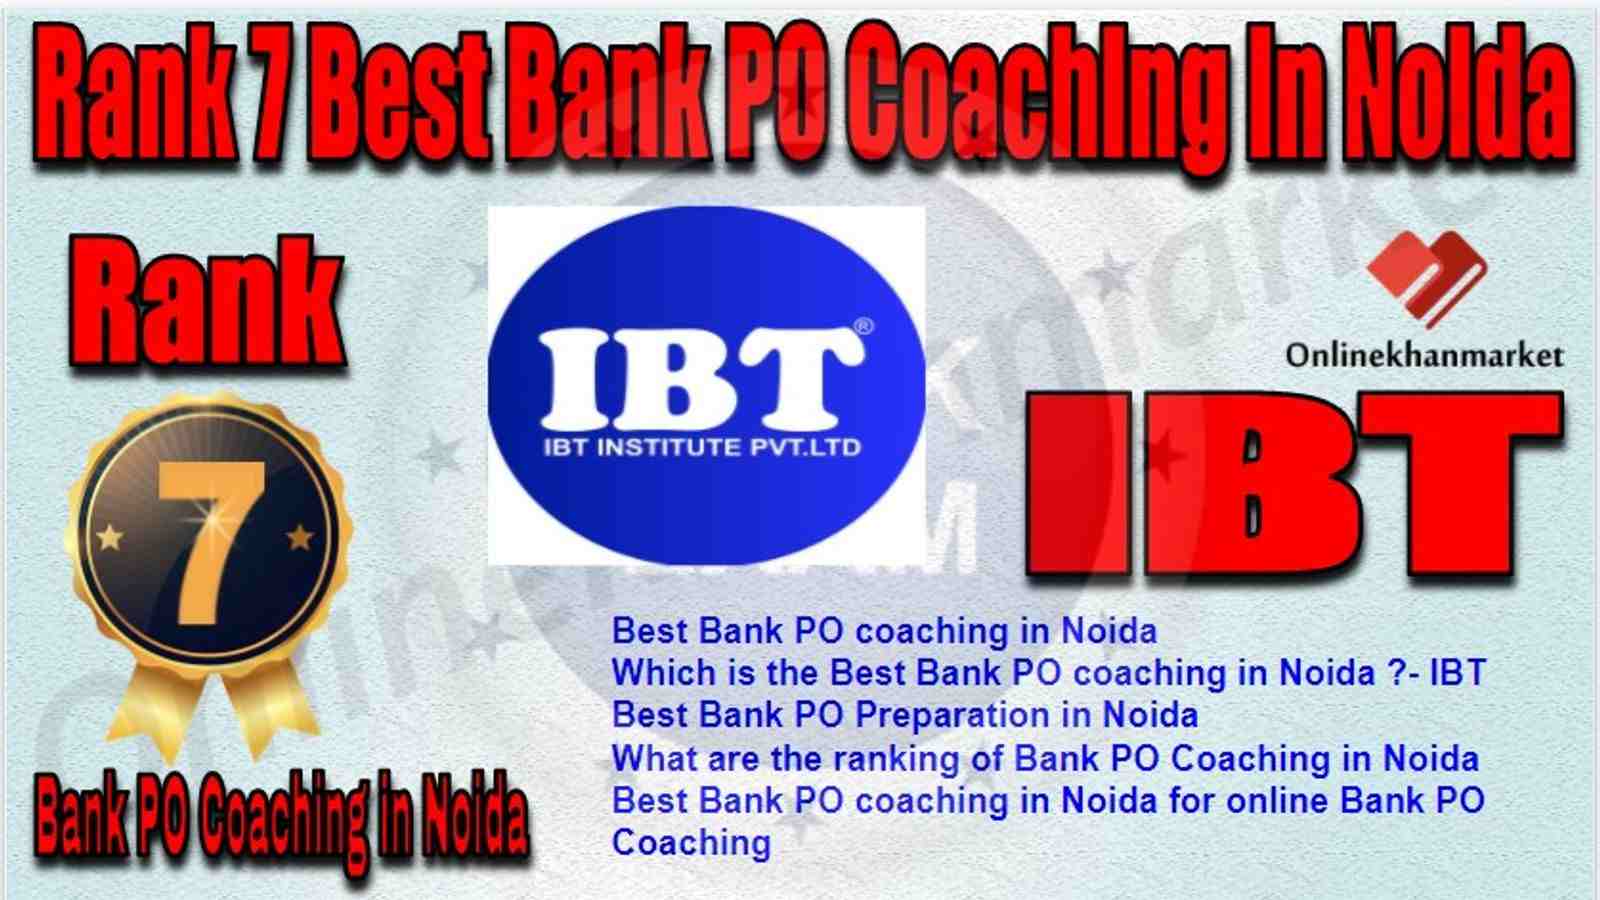 Rank 7 Best Bank PO Coaching in Noida